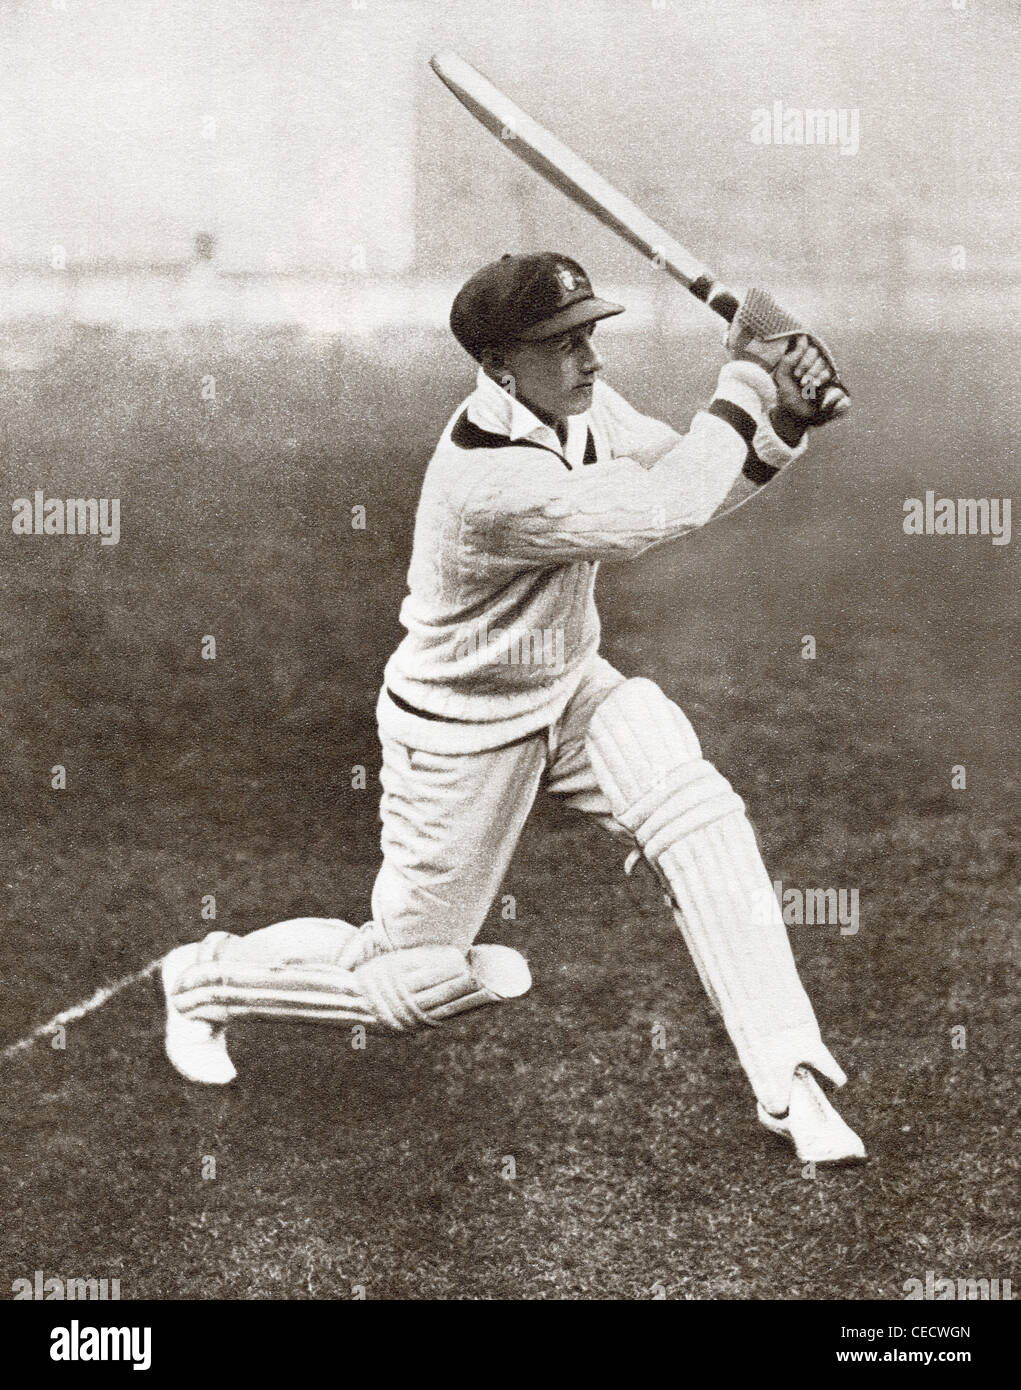 Sir Donald Bradman George, 1908 - 2001, spesso denominato "Don". Australian cricketer. Foto Stock